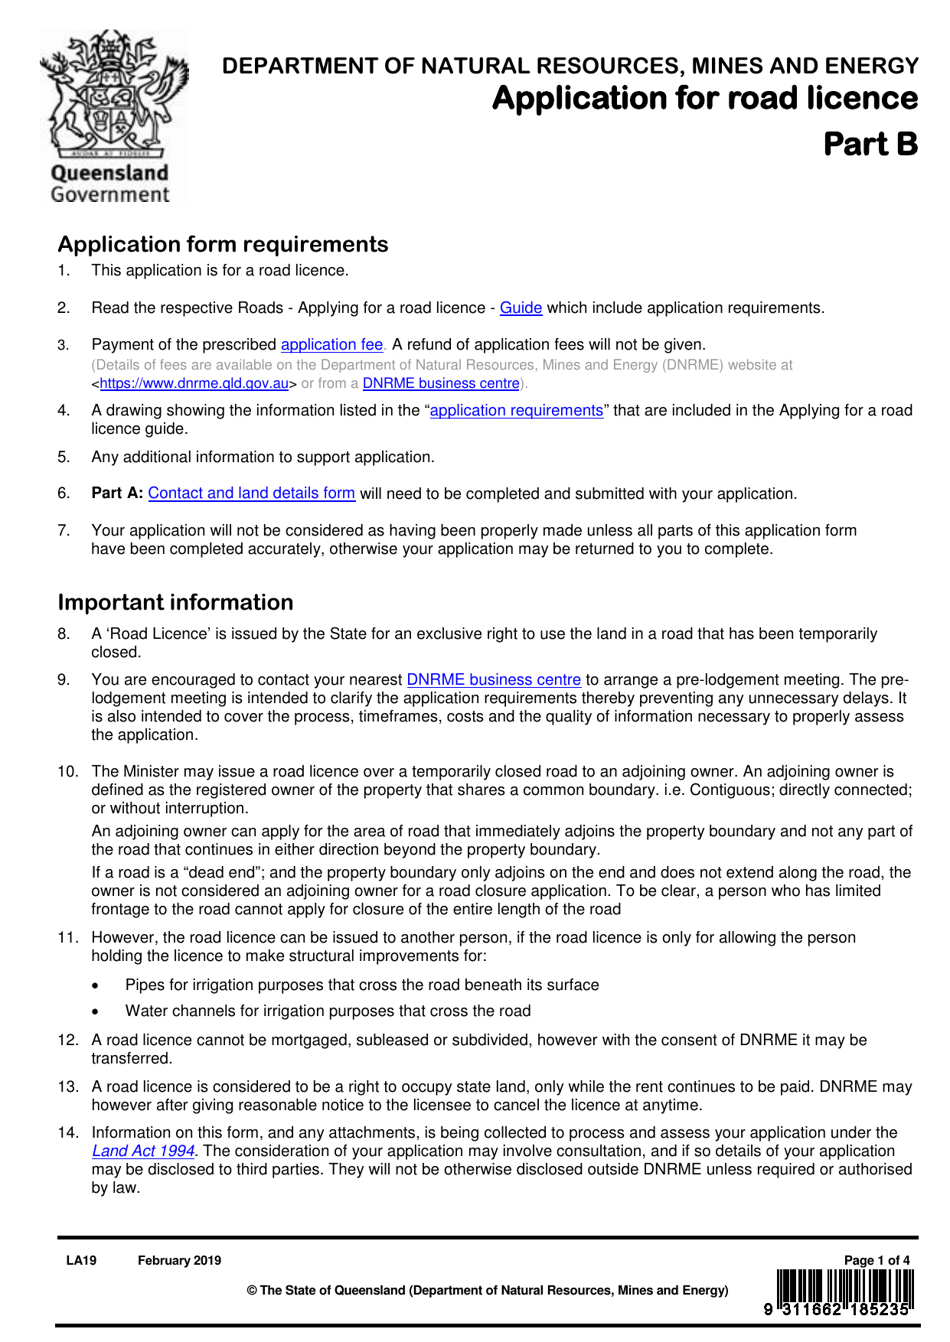 Form LA19 Part B Application for Road Licence - Queensland, Australia, Page 1